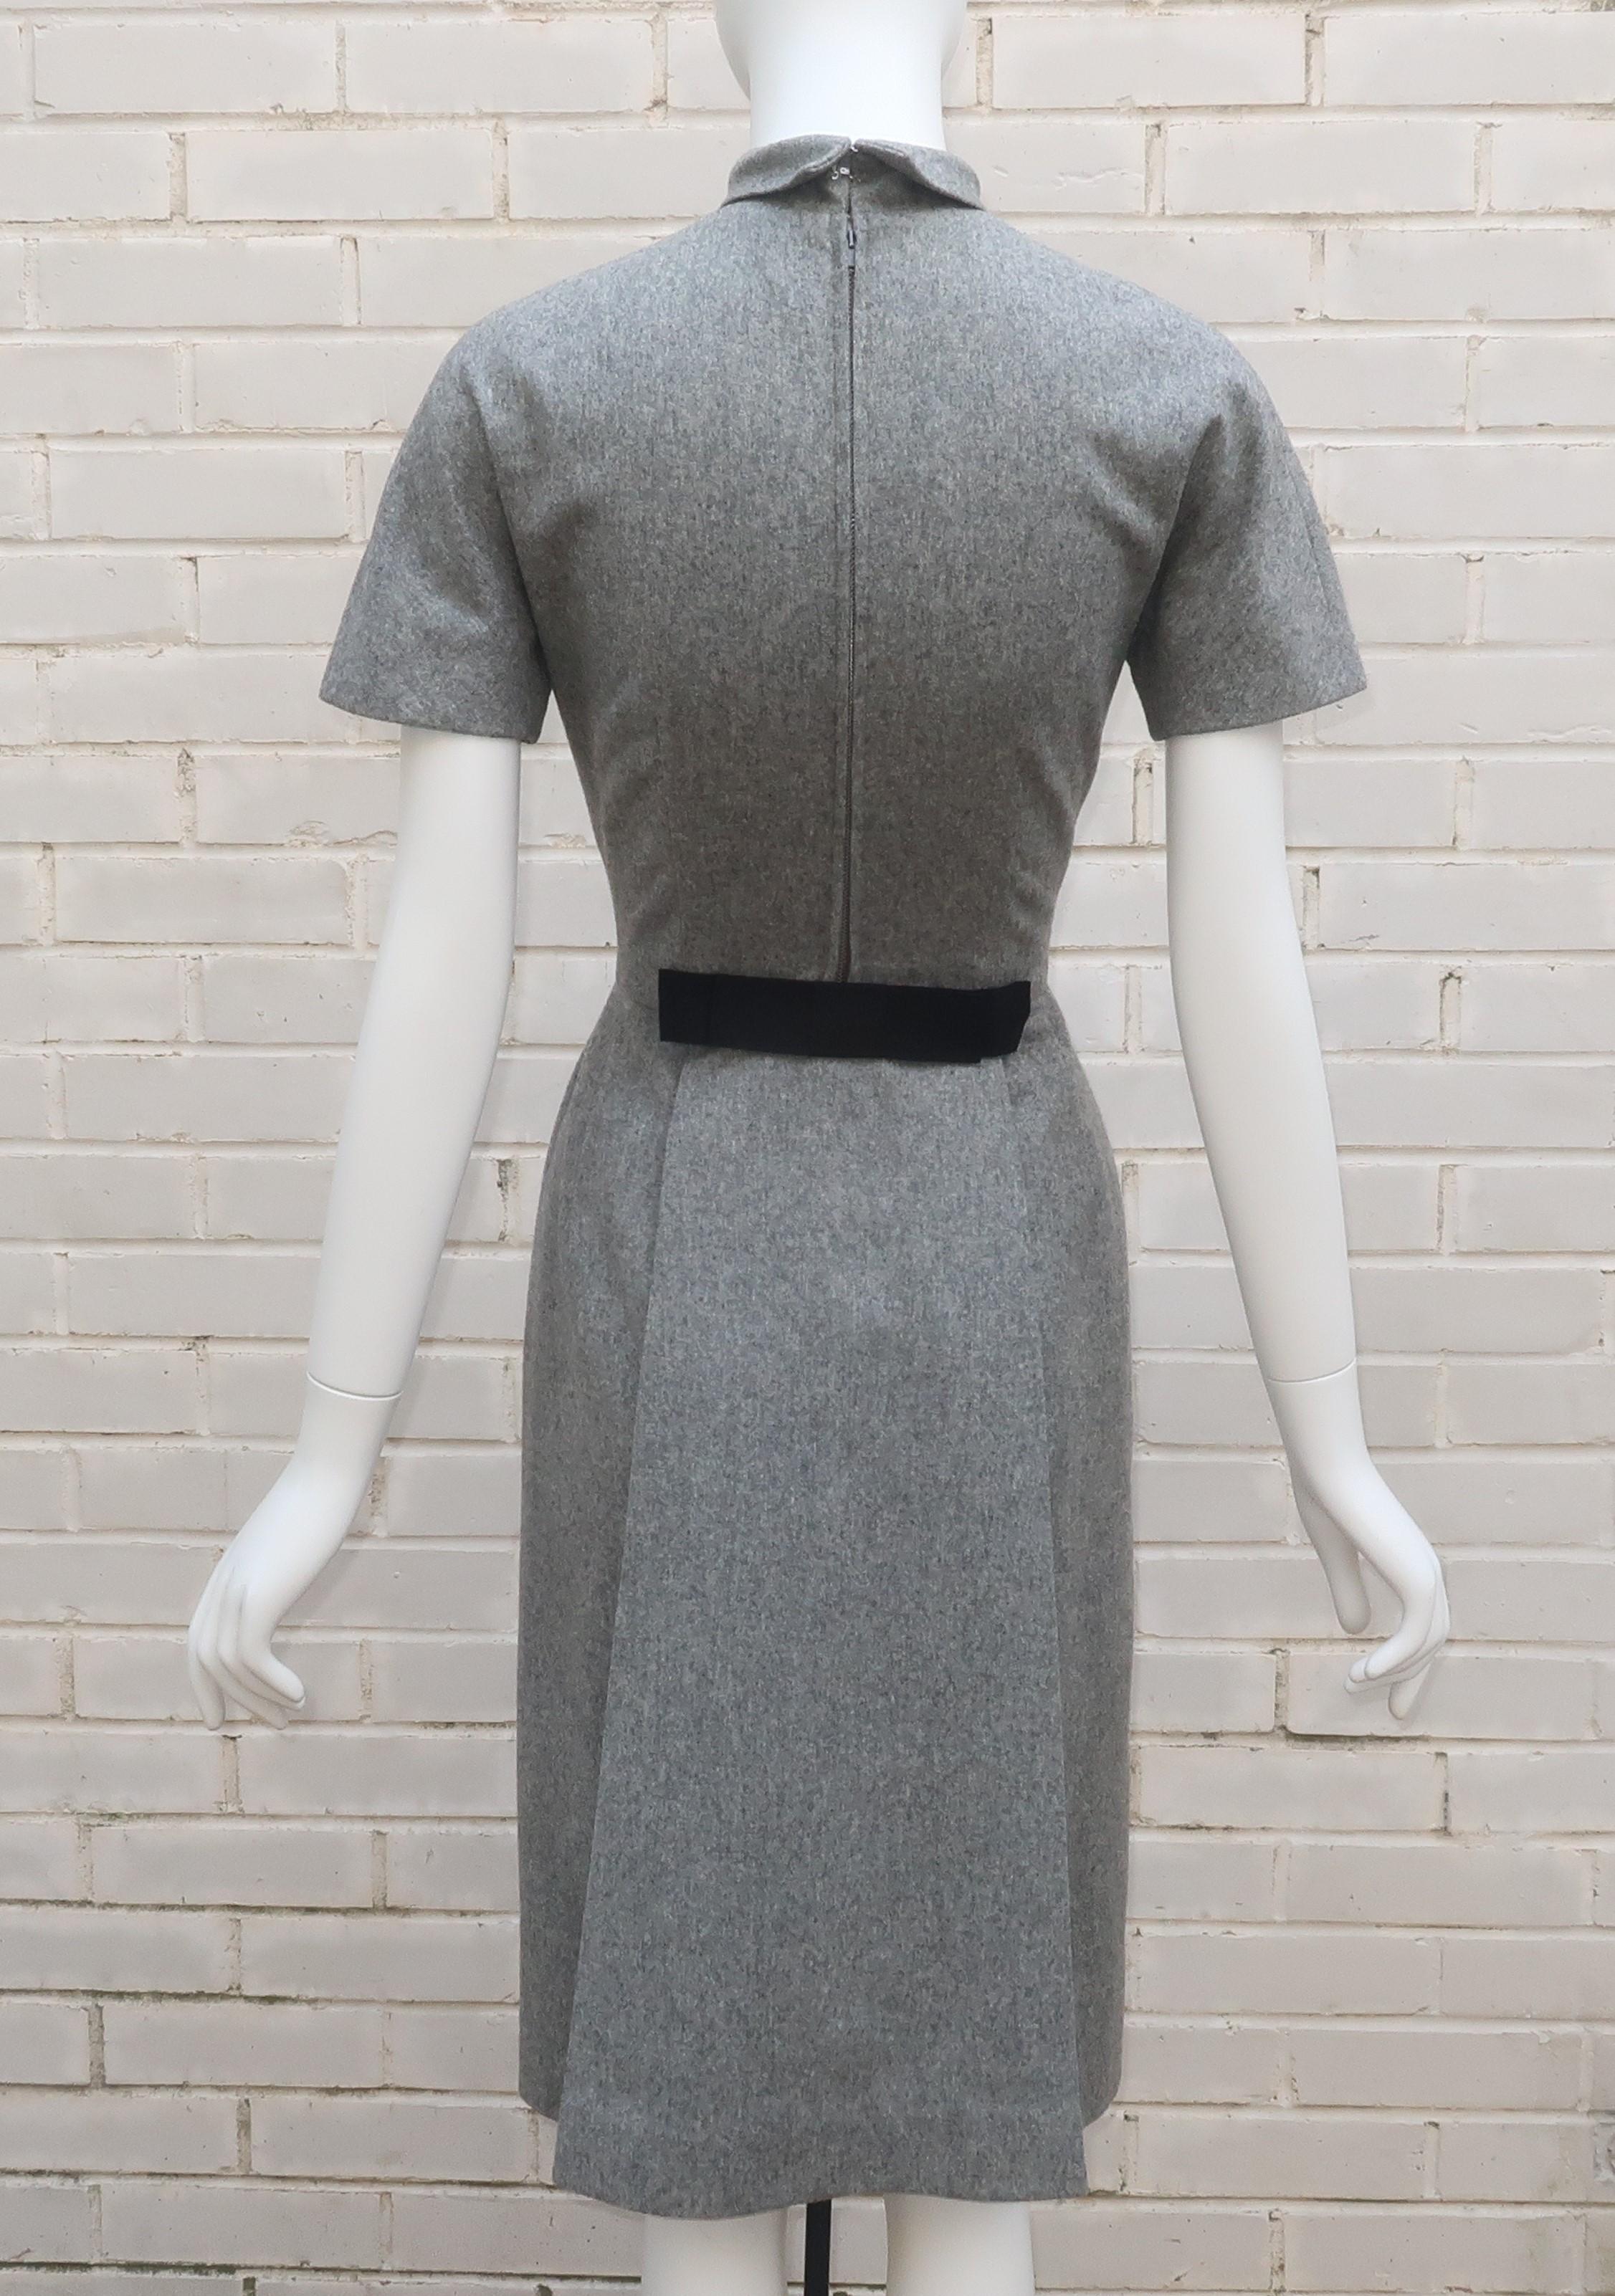 Lillie Rubin Dove Gray Wool Dress & Coat Set, 1950's 8